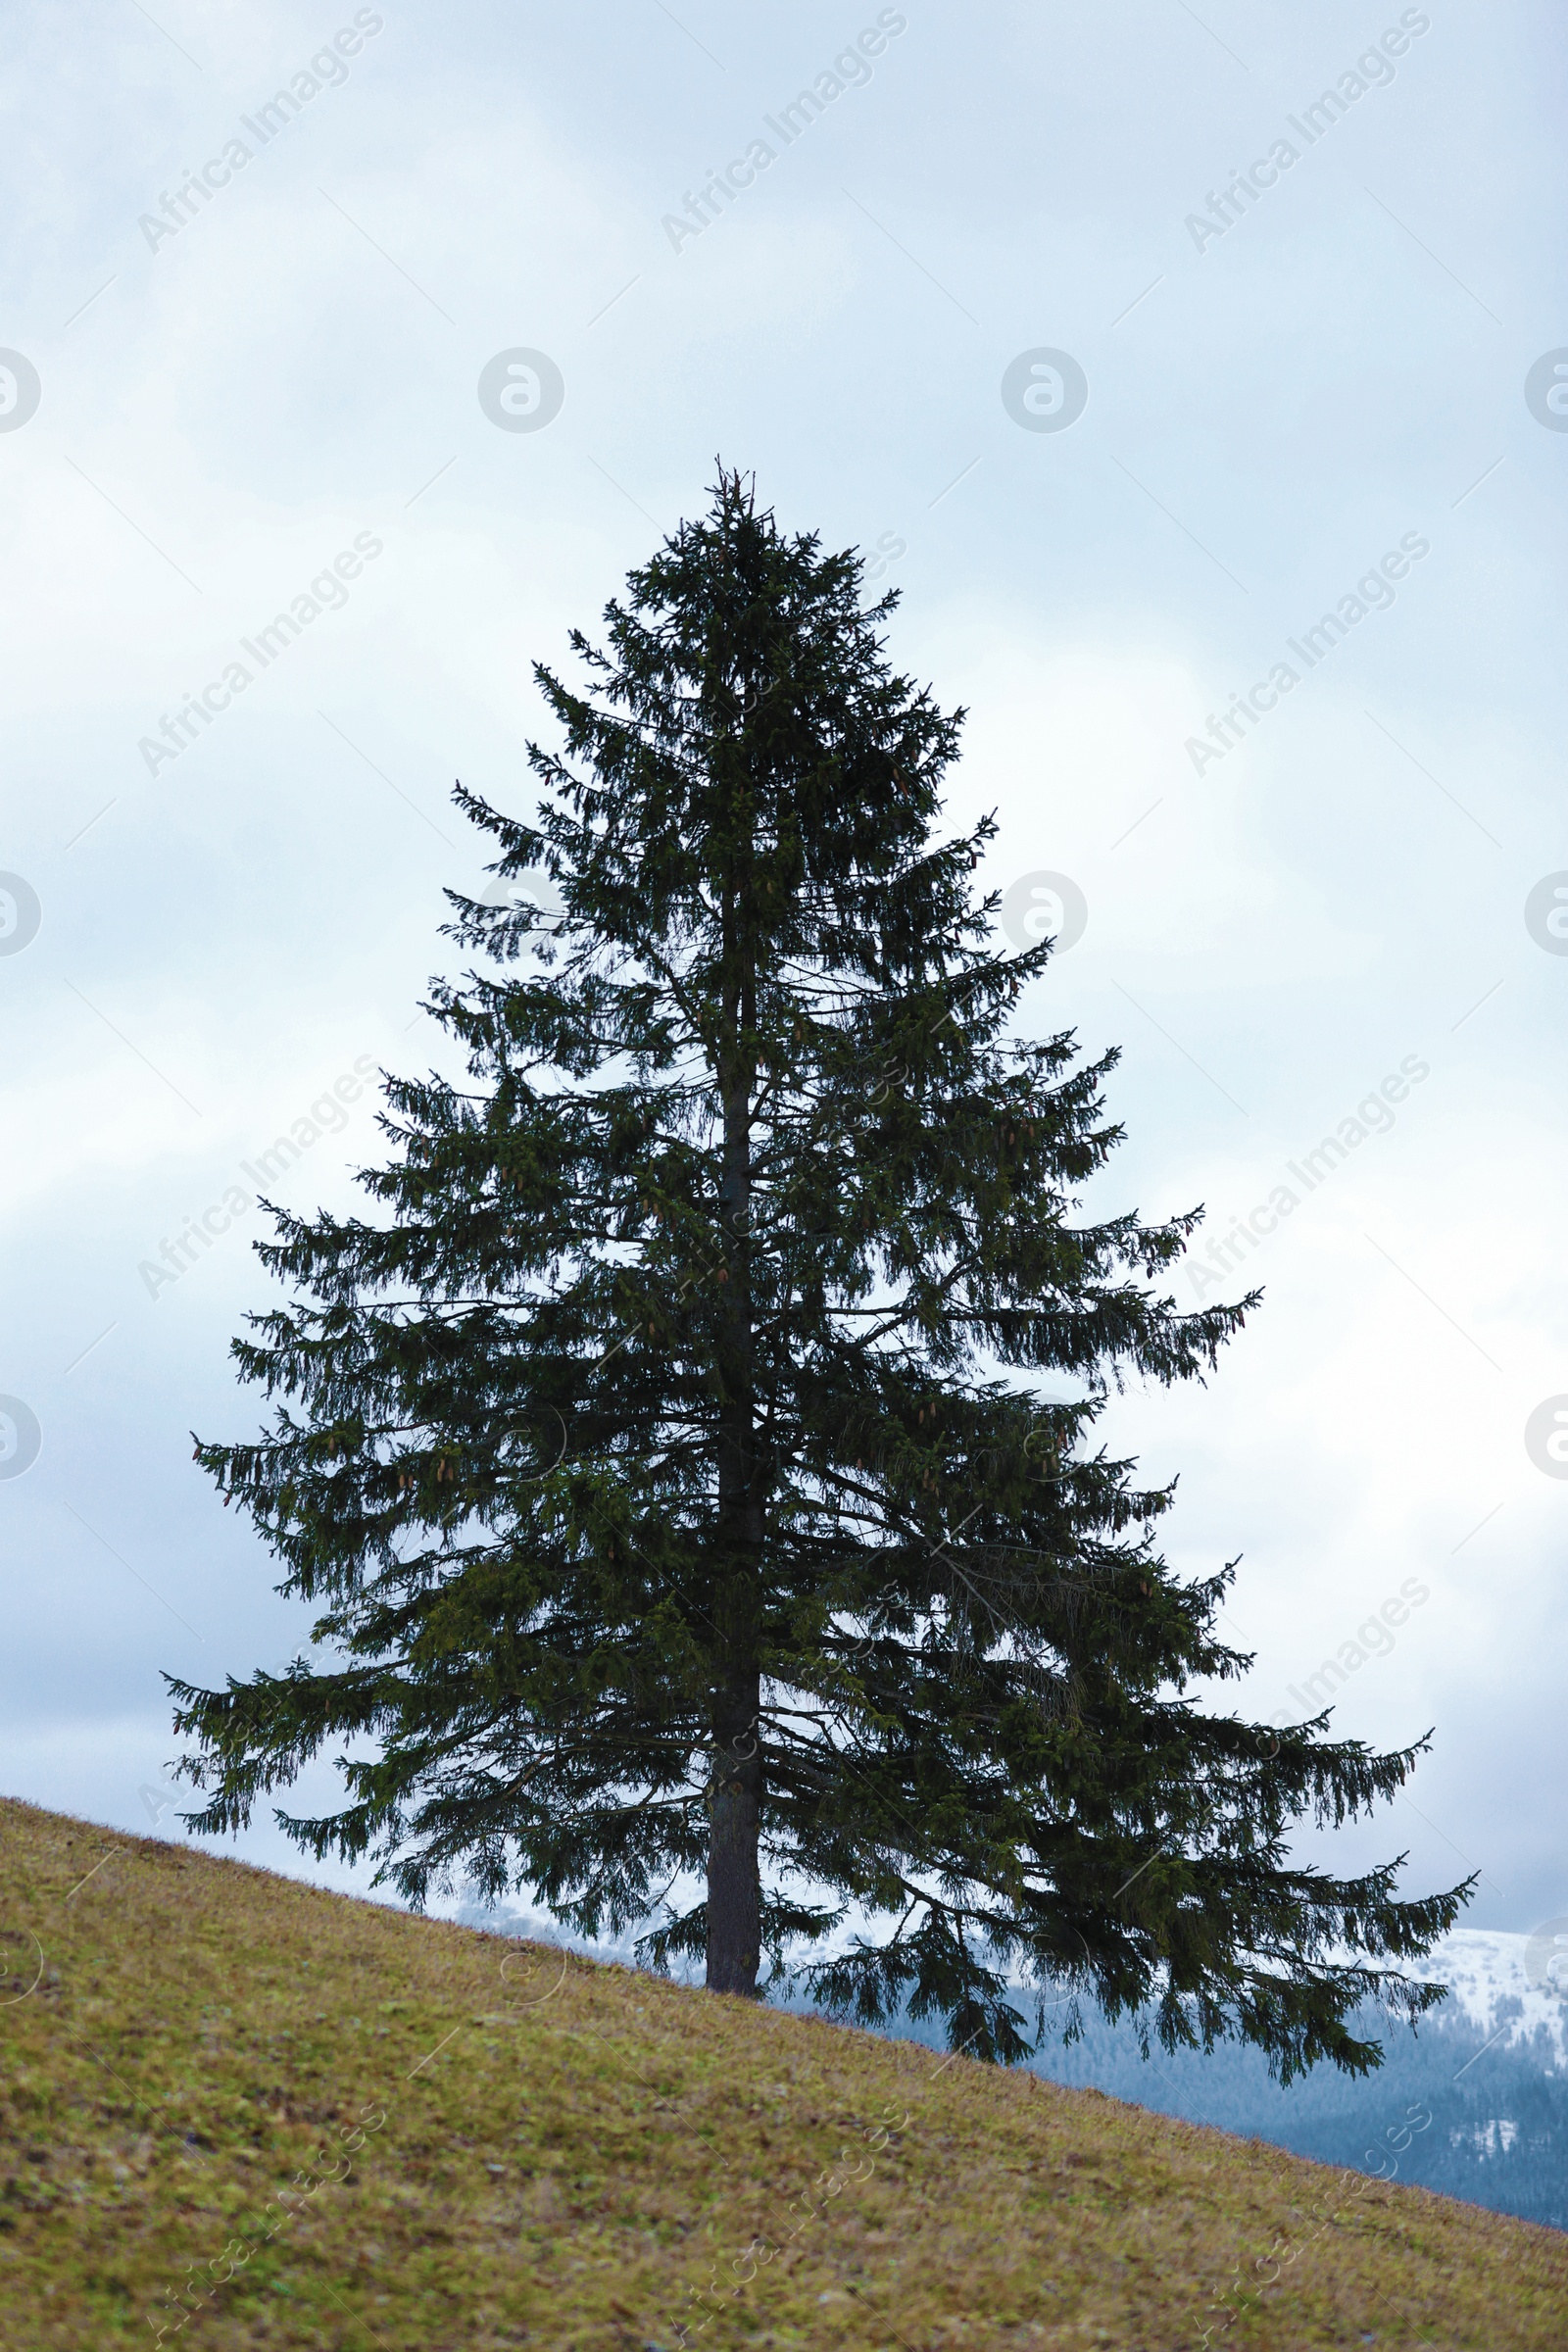 Photo of High fir tree on hill under cloudy sky